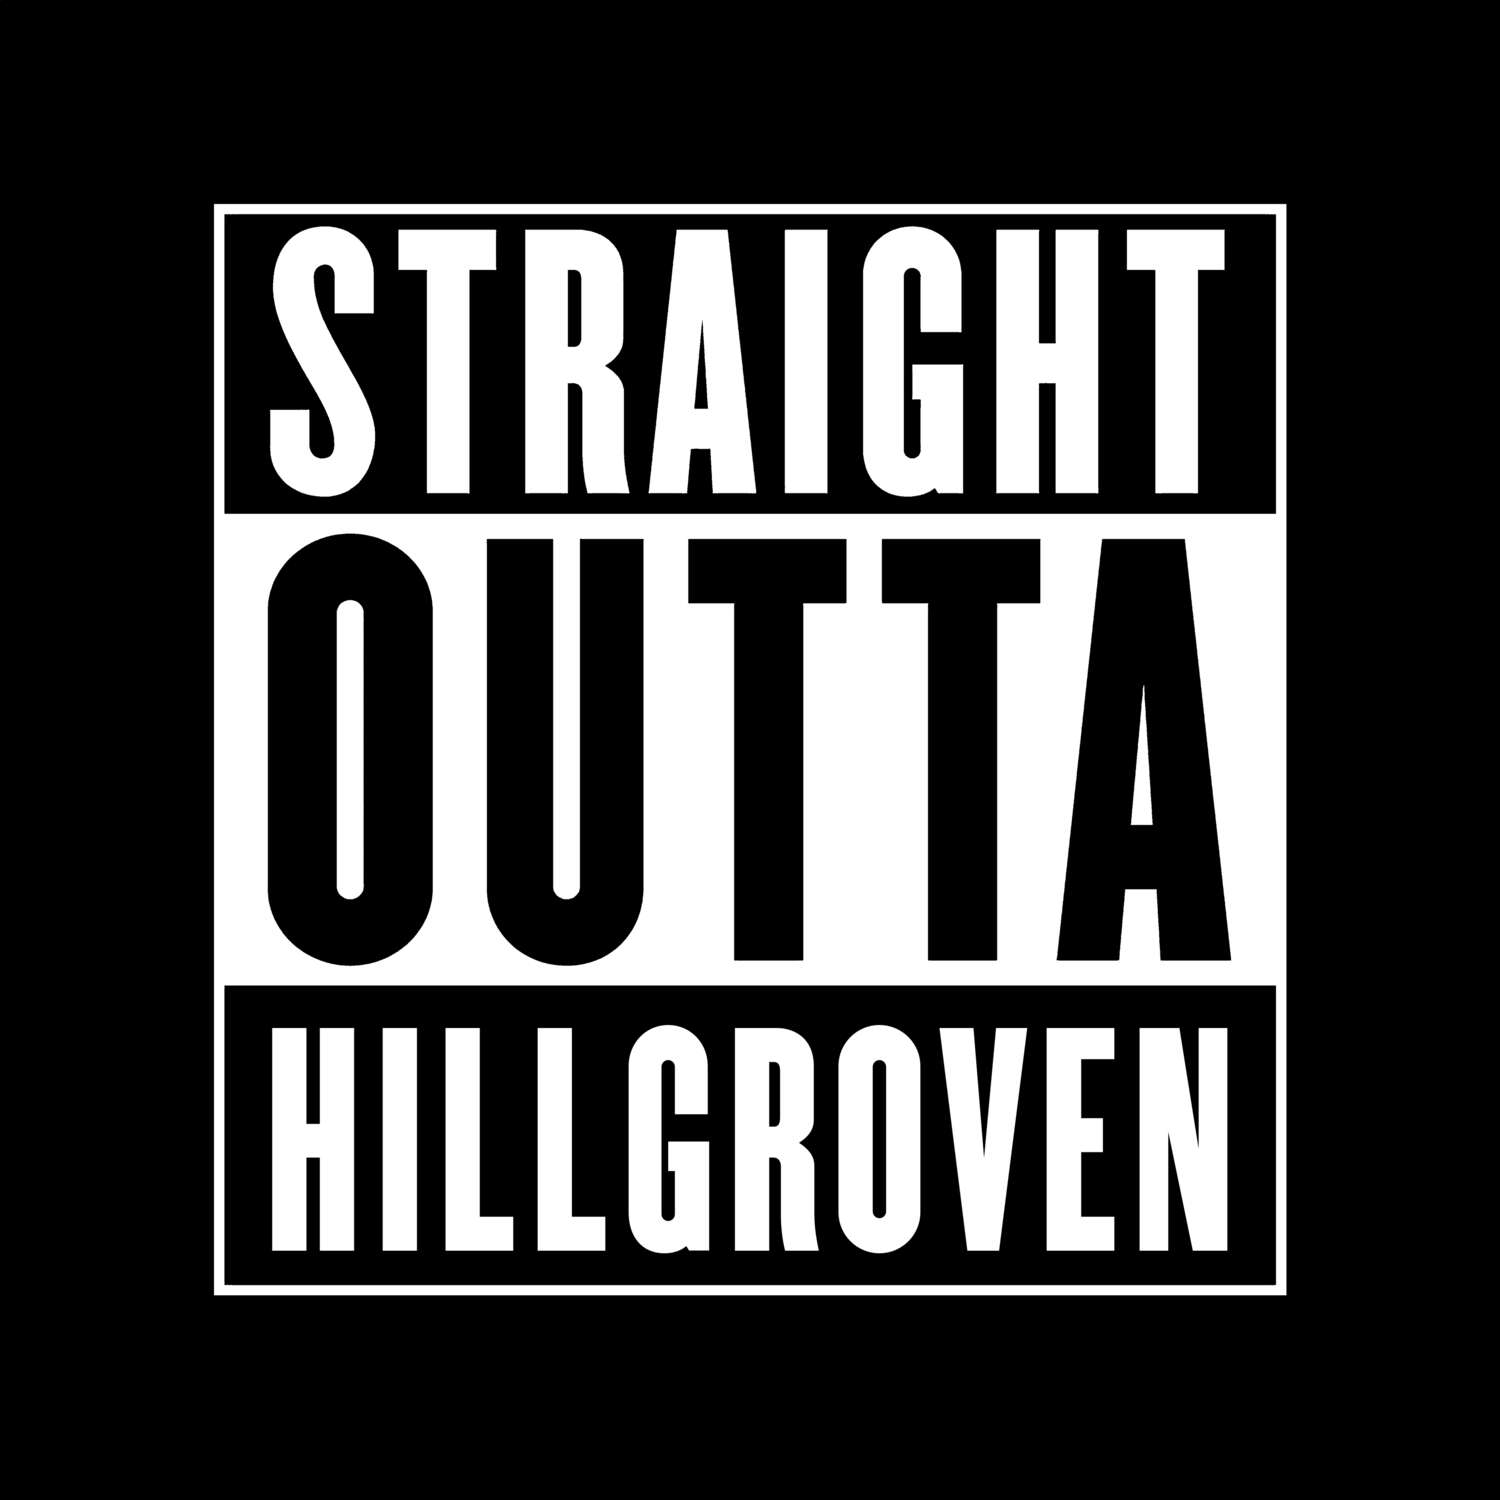 Hillgroven T-Shirt »Straight Outta«